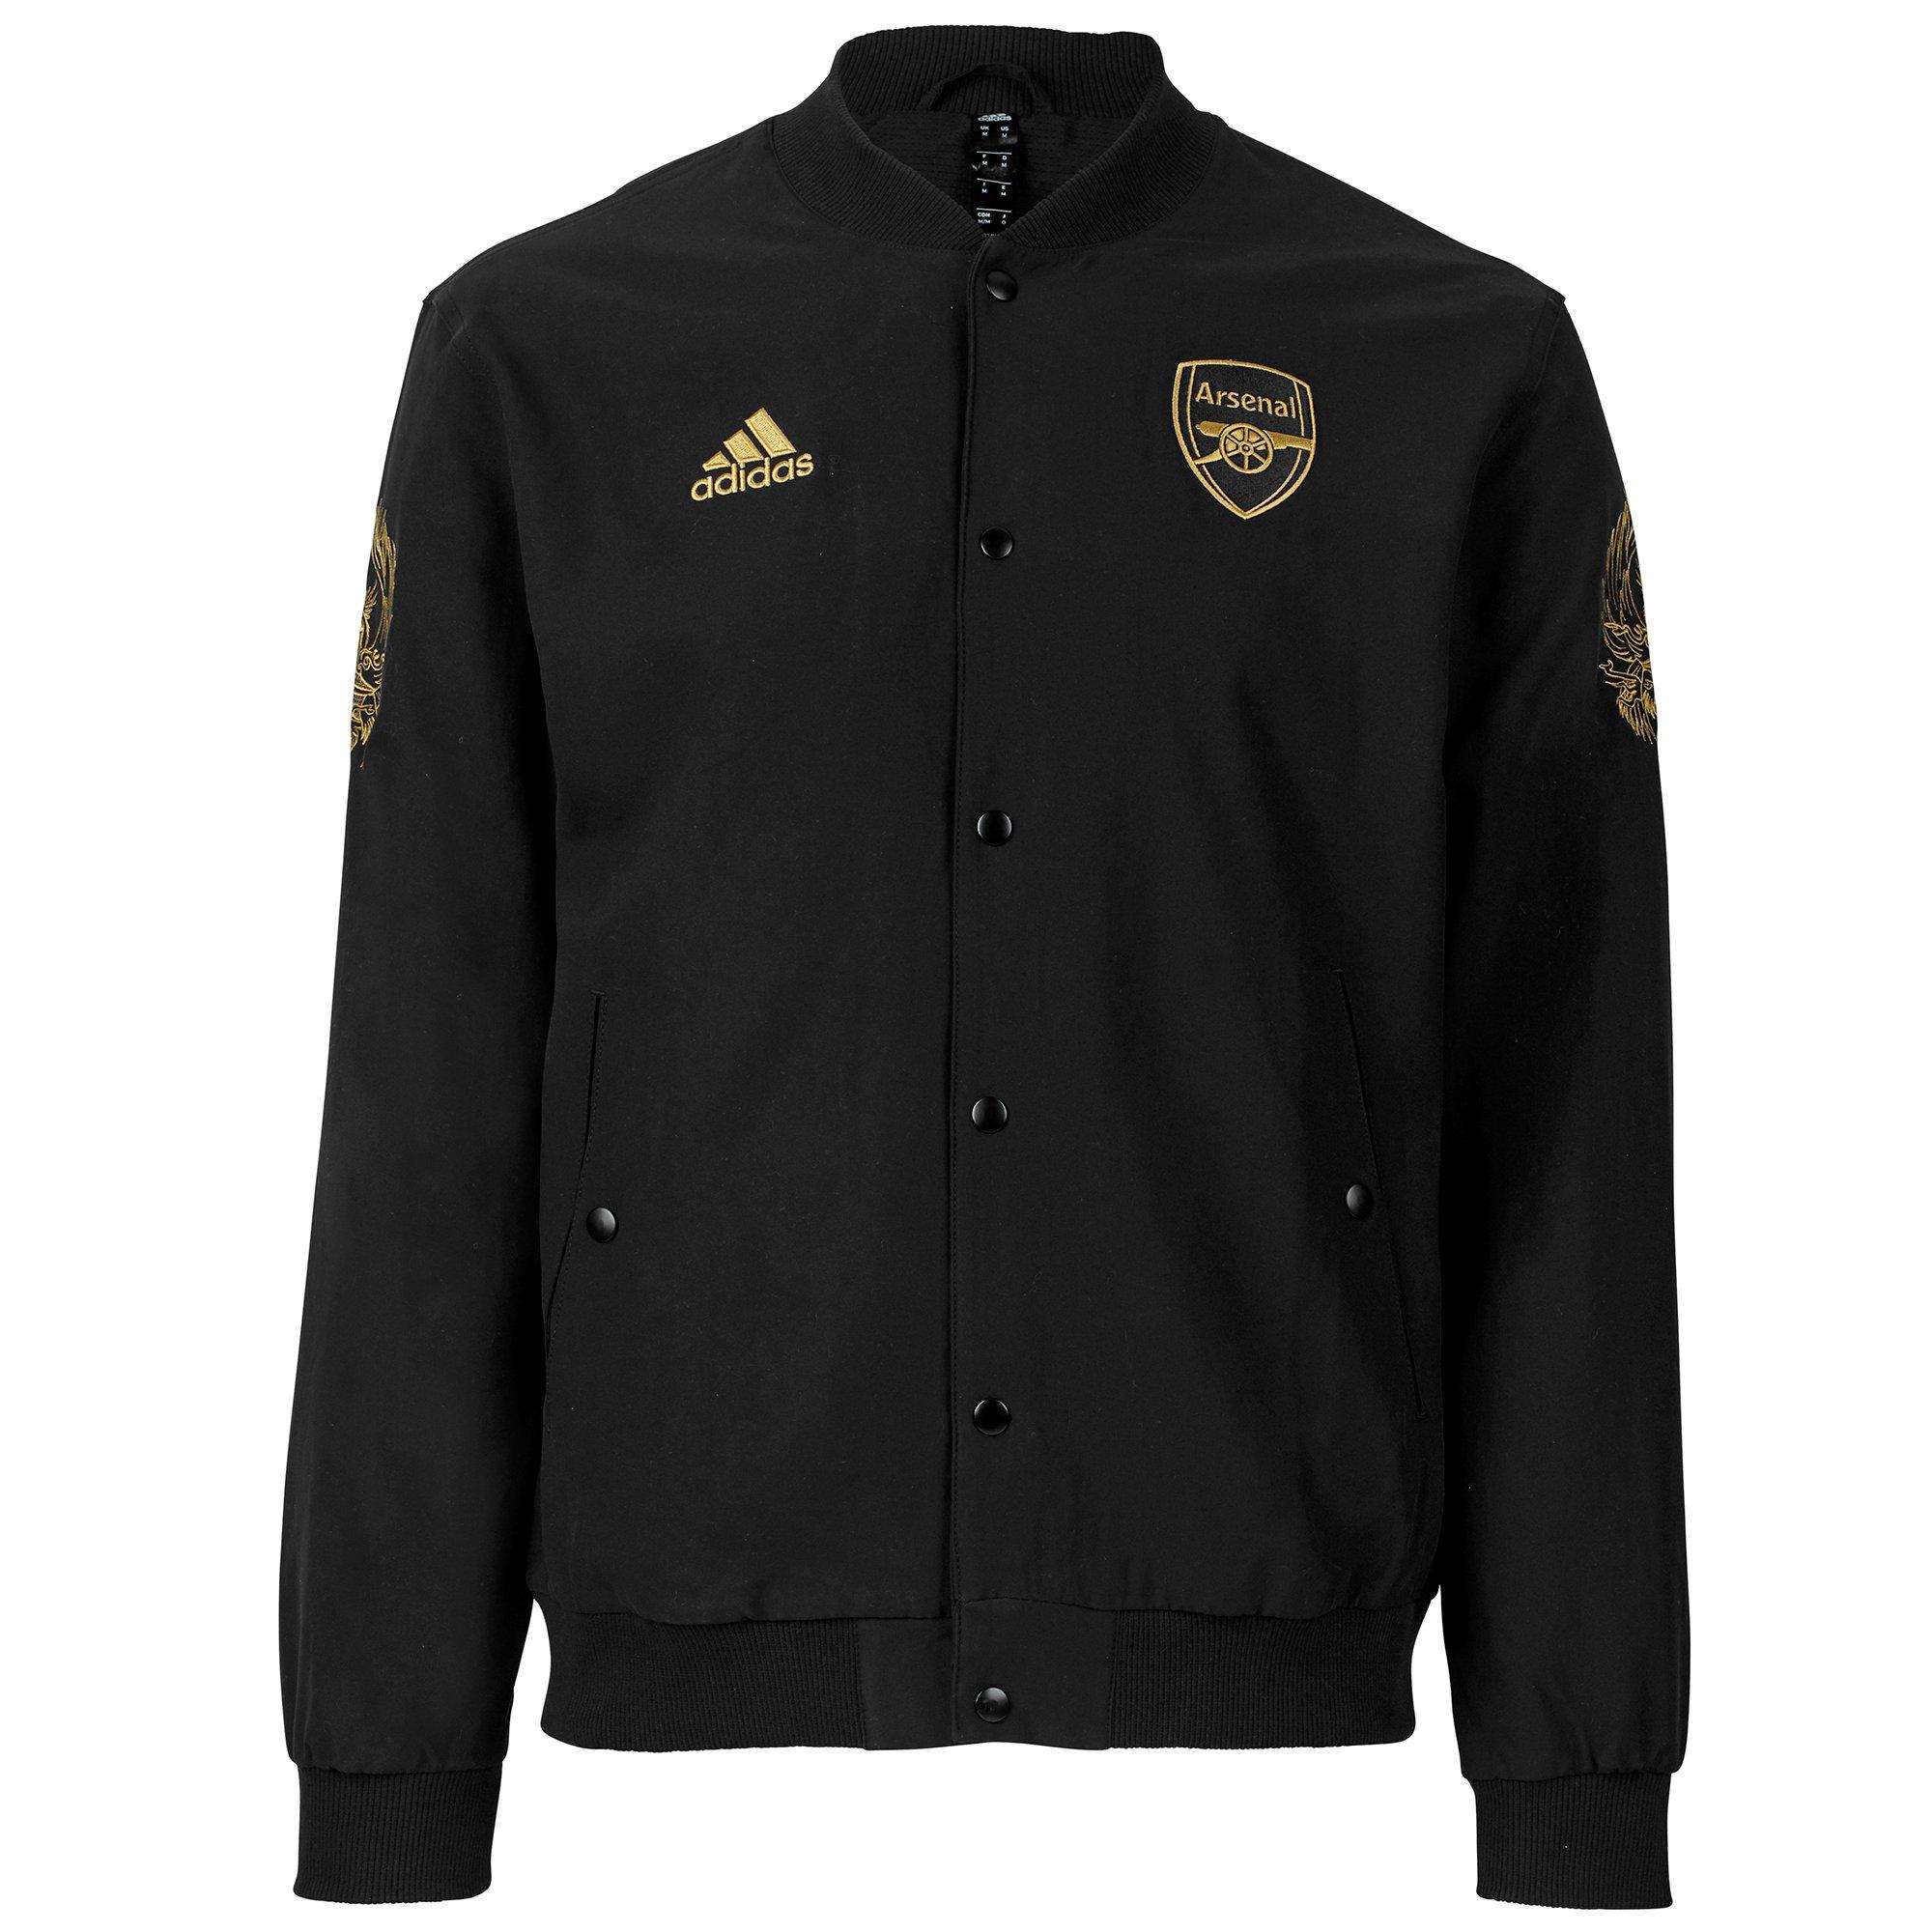 arsenal adidas black jacket